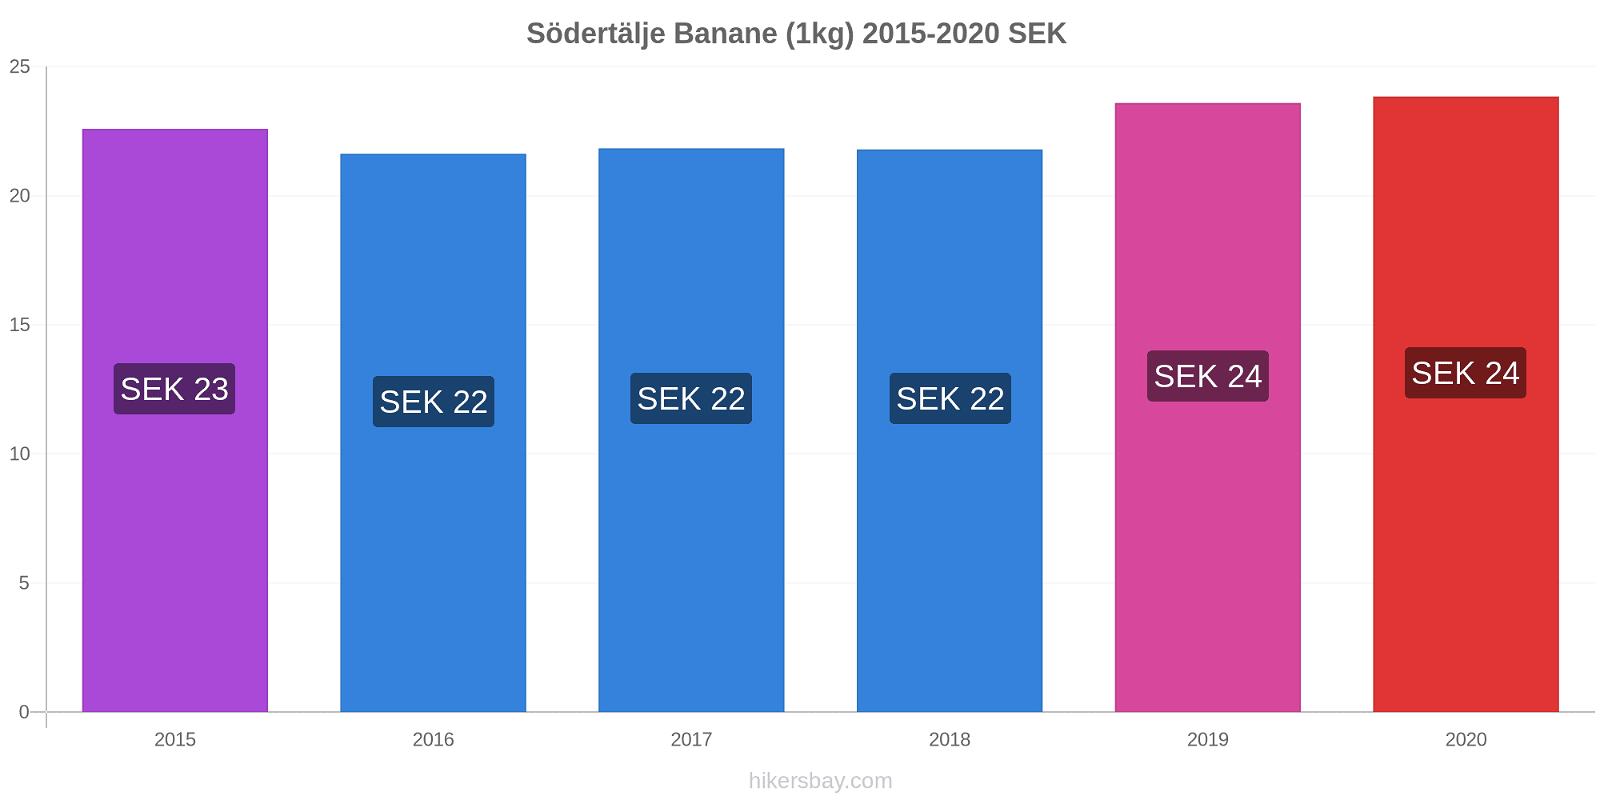 Södertälje variazioni di prezzo Banana (1kg) hikersbay.com